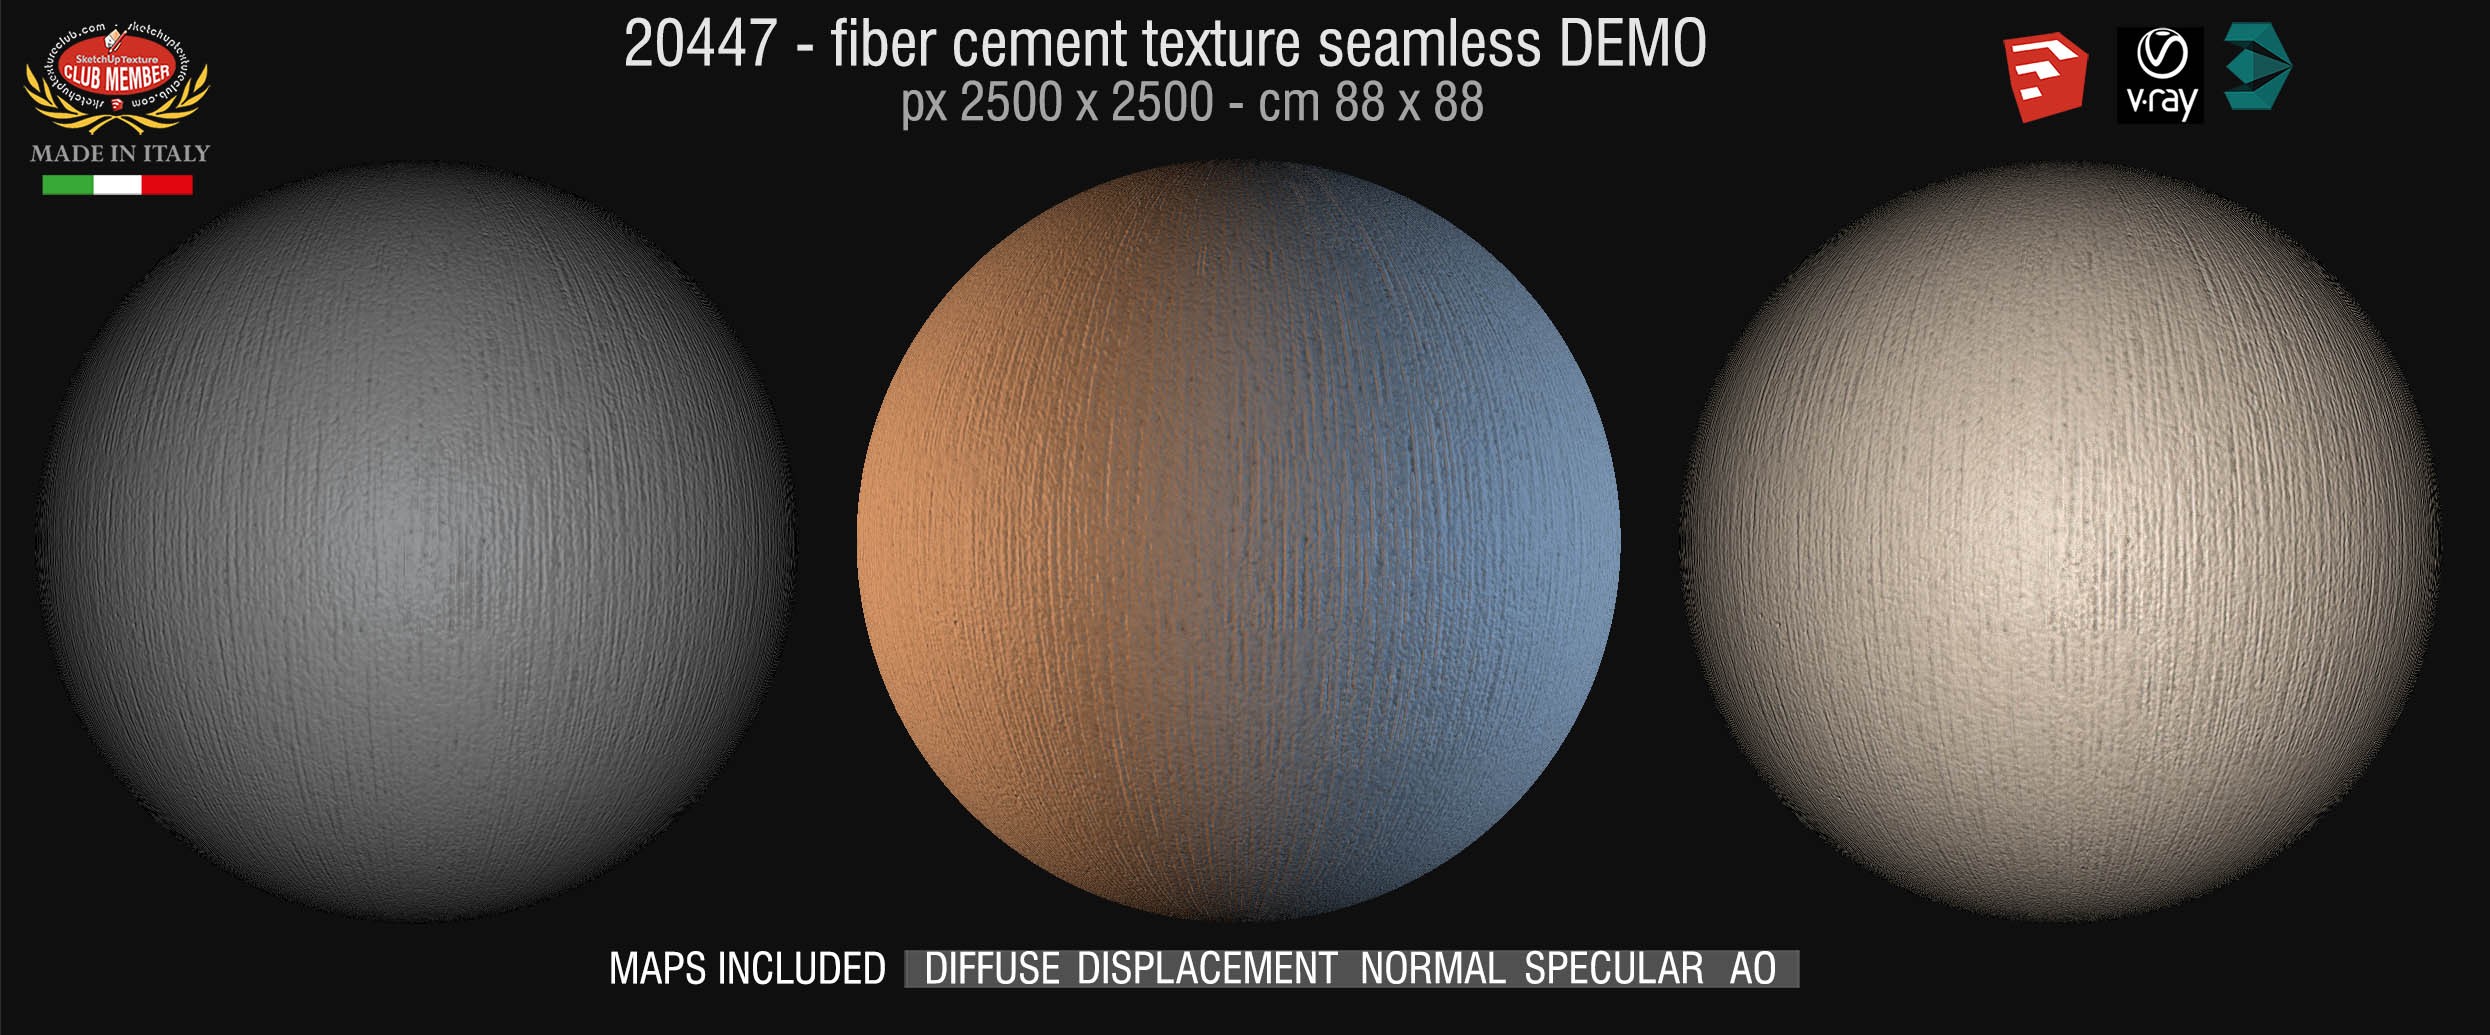 20447 HR Fiber cement texture + maps DEMO